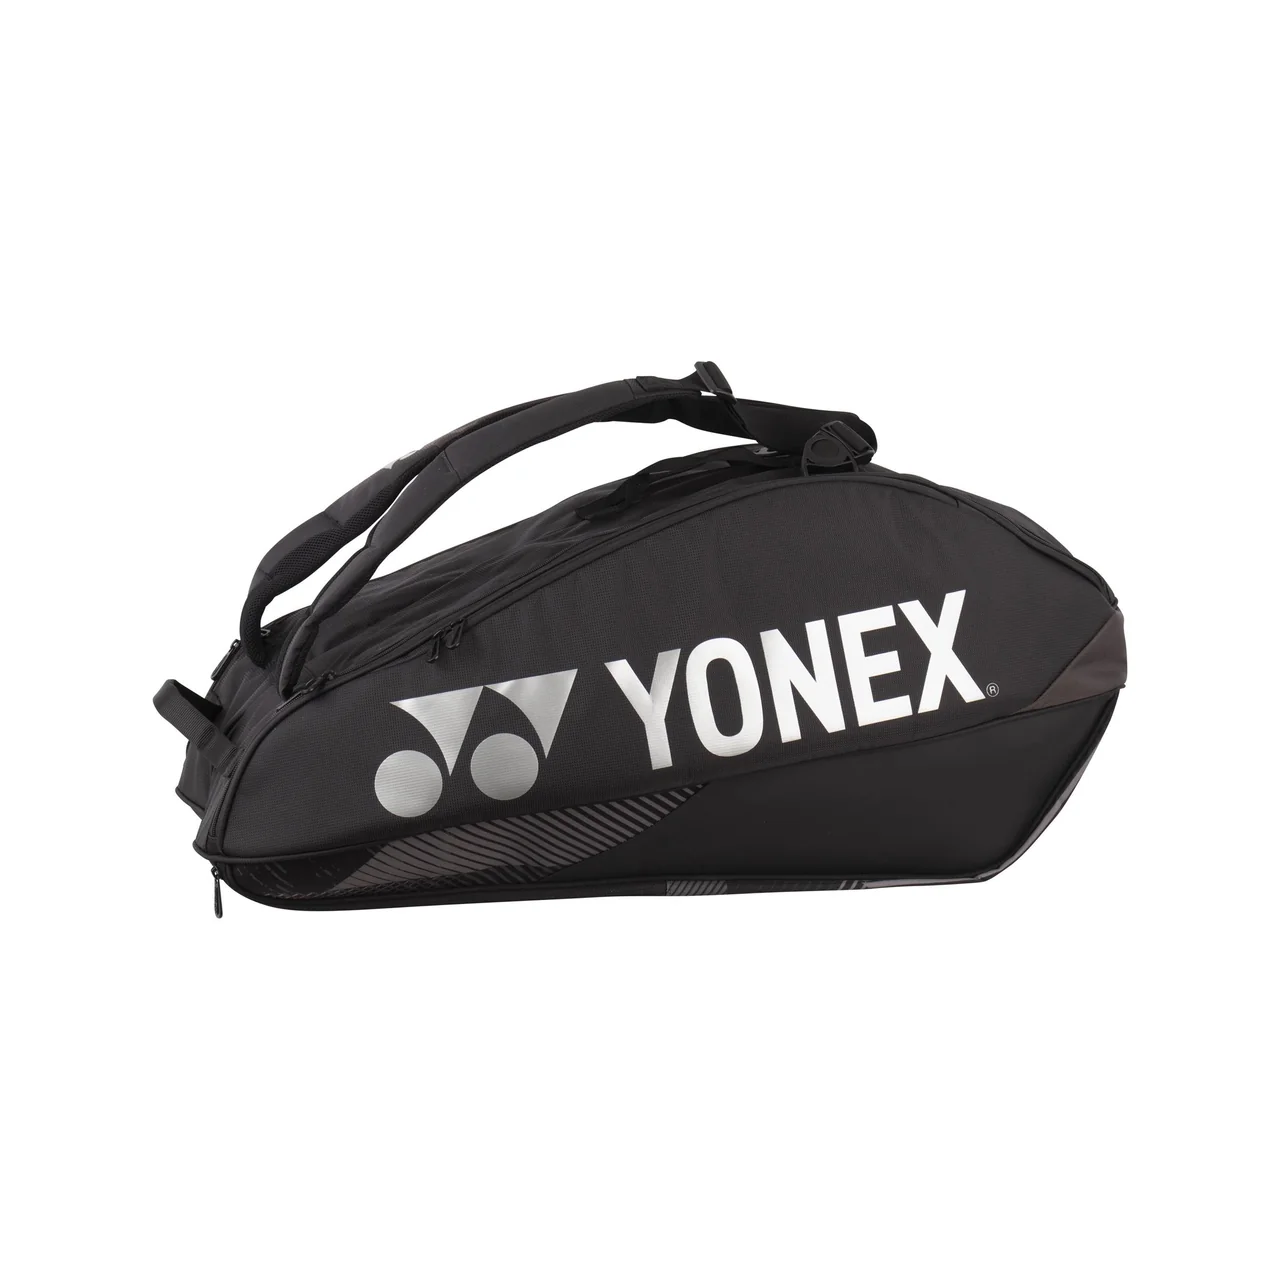 Yonex Pro Racket Bag x6 Black